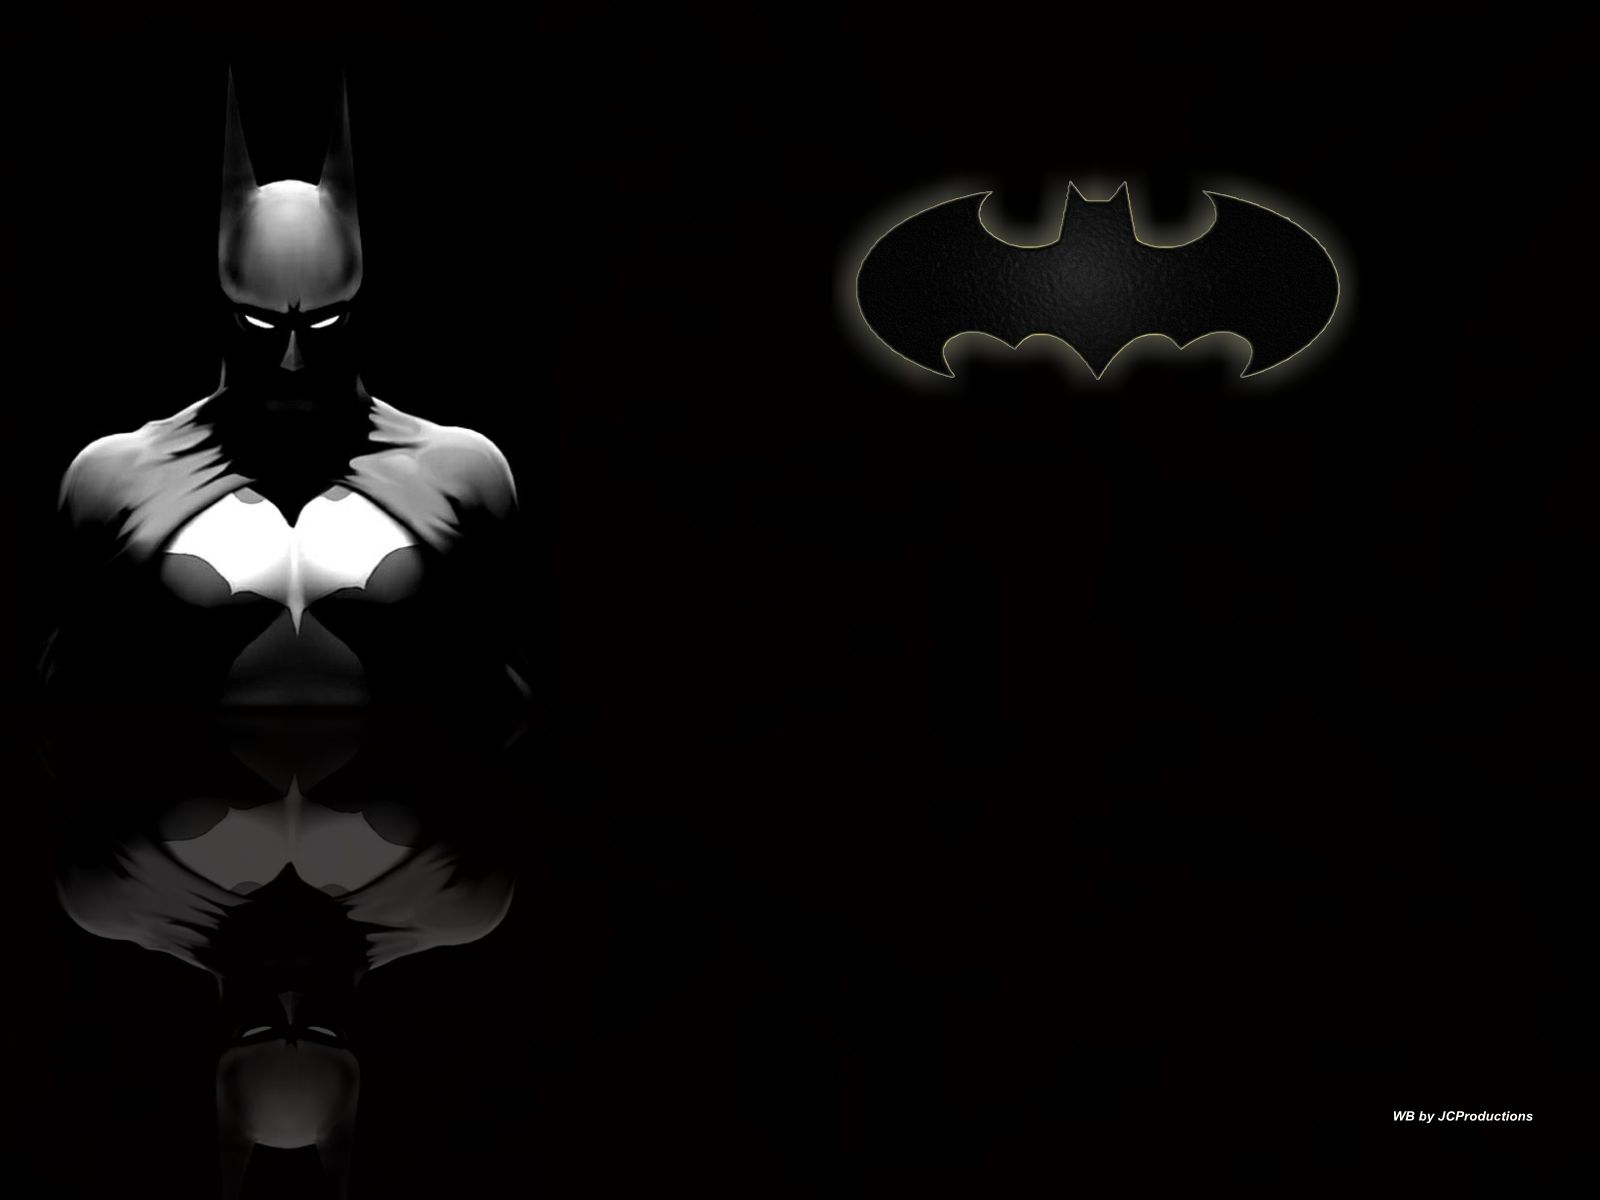 Free Download Batman The Dark Knight Batman Wallpaper 1600x10 For Your Desktop Mobile Tablet Explore 72 Batman Dark Knight Wallpaper Batman Wallpaper 19x1080 Dark Knight Returns Wallpaper Dark Knight Rises Wallpaper